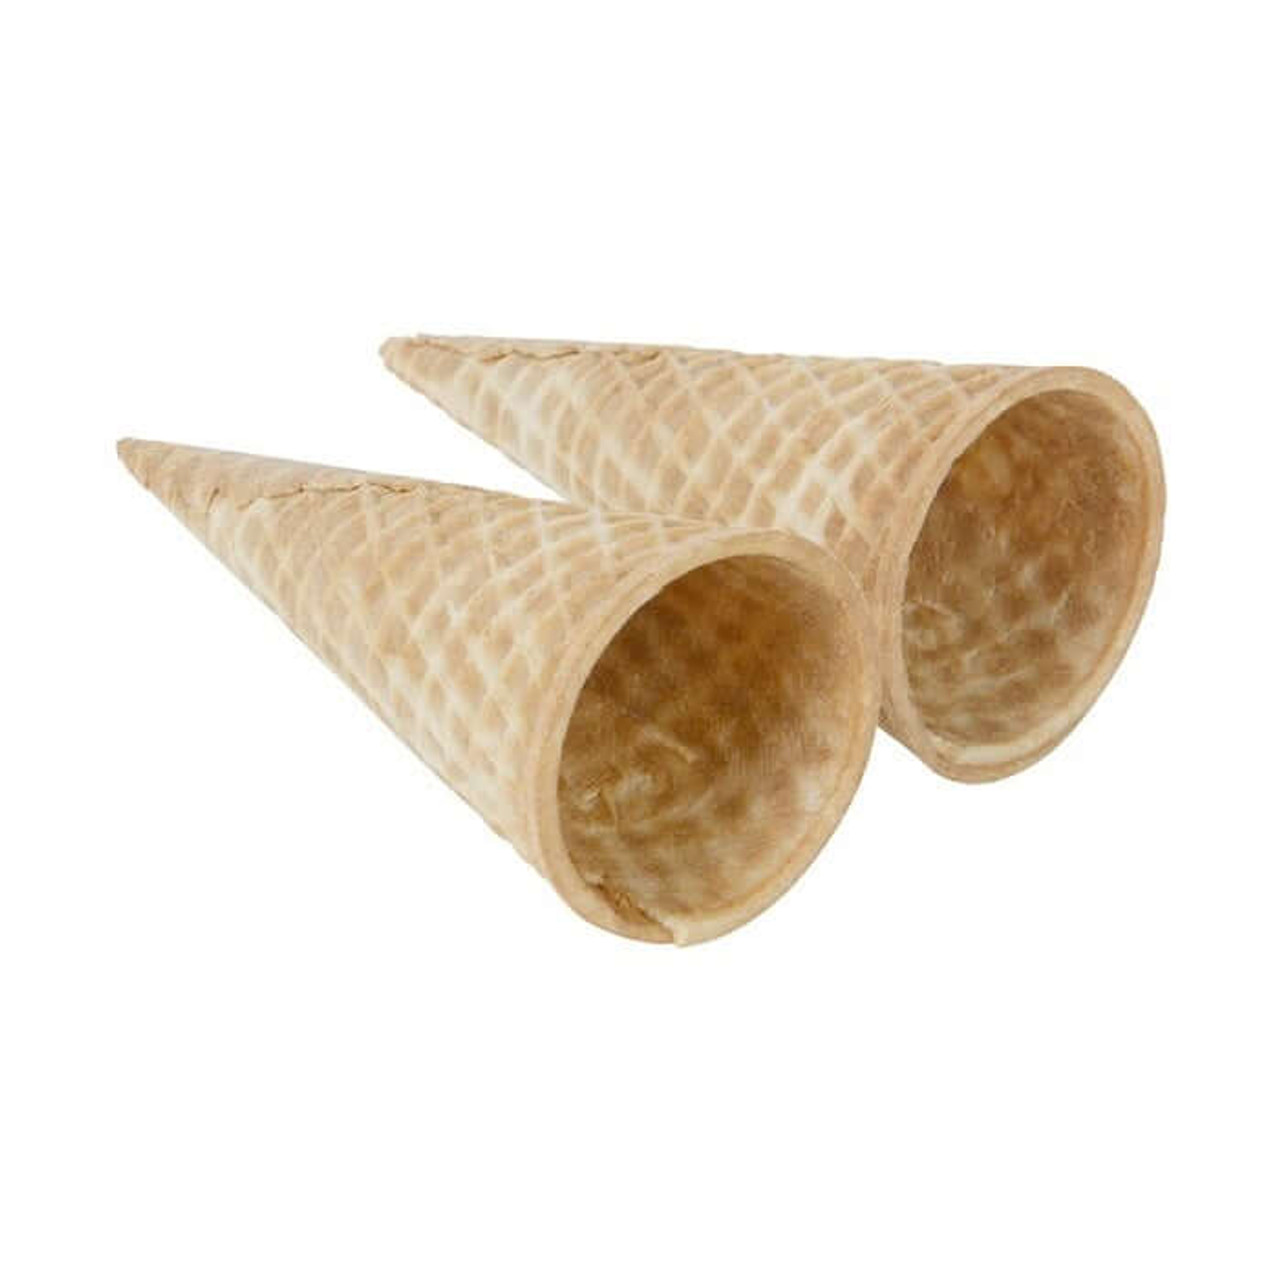 JOY #310 Sugar Cone - 800/Case for Sweet and Crispy Ice Cream Delights